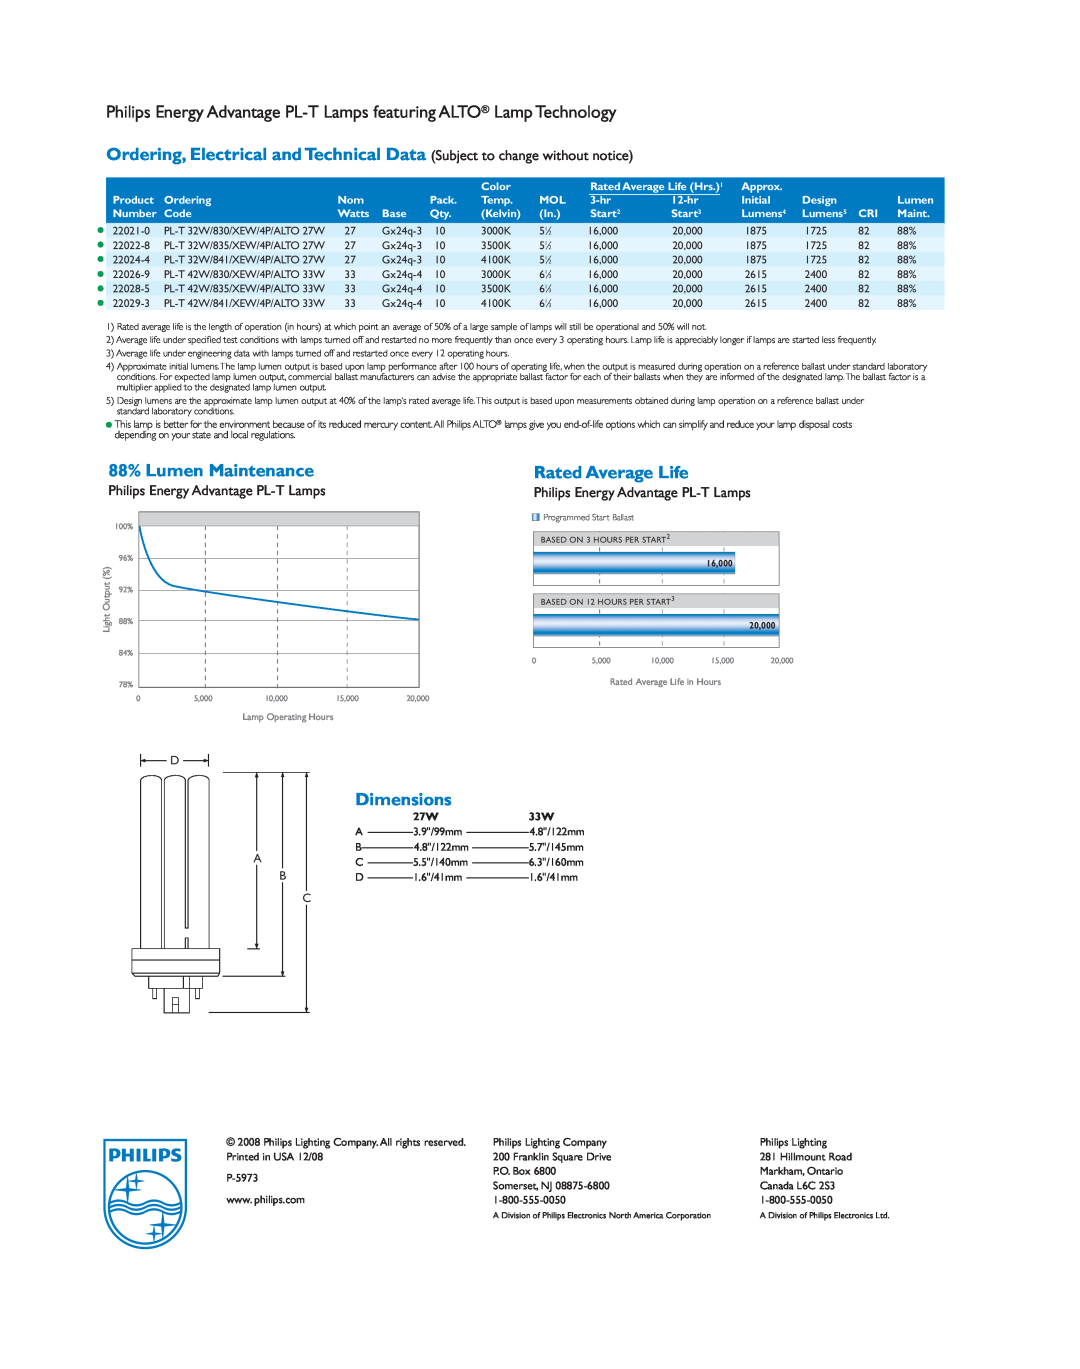 Philips P-5973 manual 88% Lumen Maintenance, Rated Average Life, Dimensions, Philips Energy Advantage PL-TLamps, 27W33W 